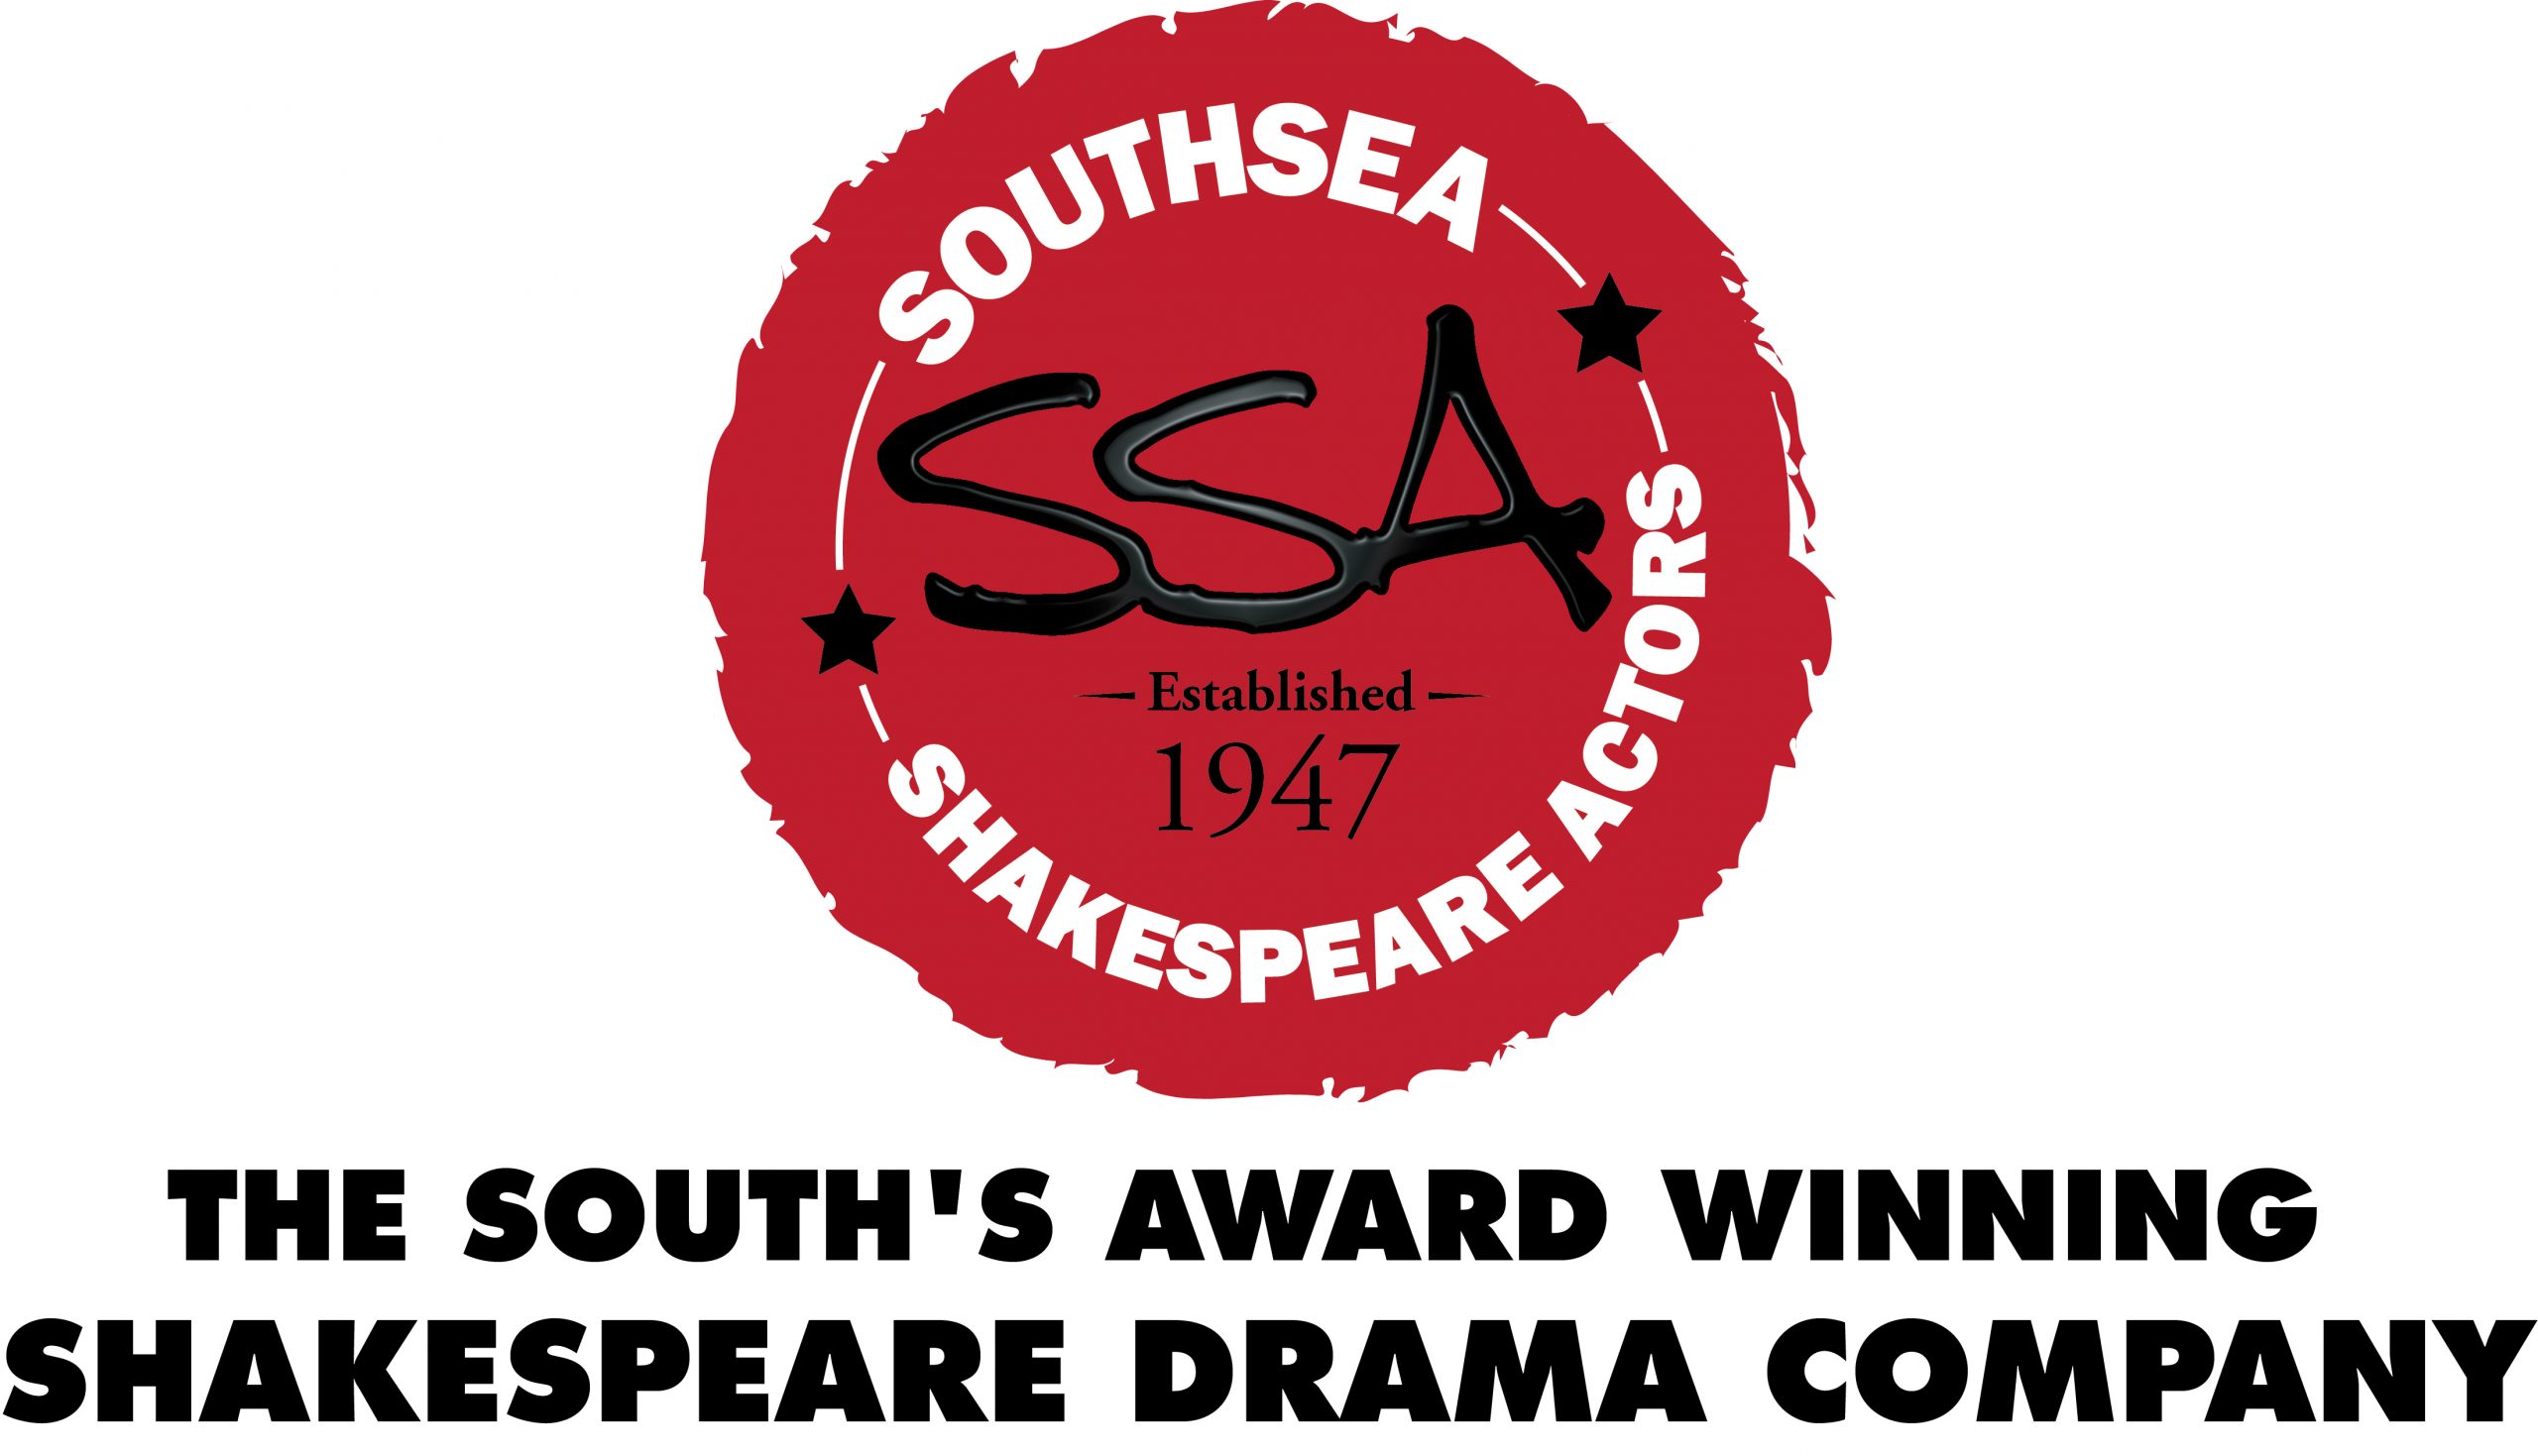 Southsea Shakespeare Actors